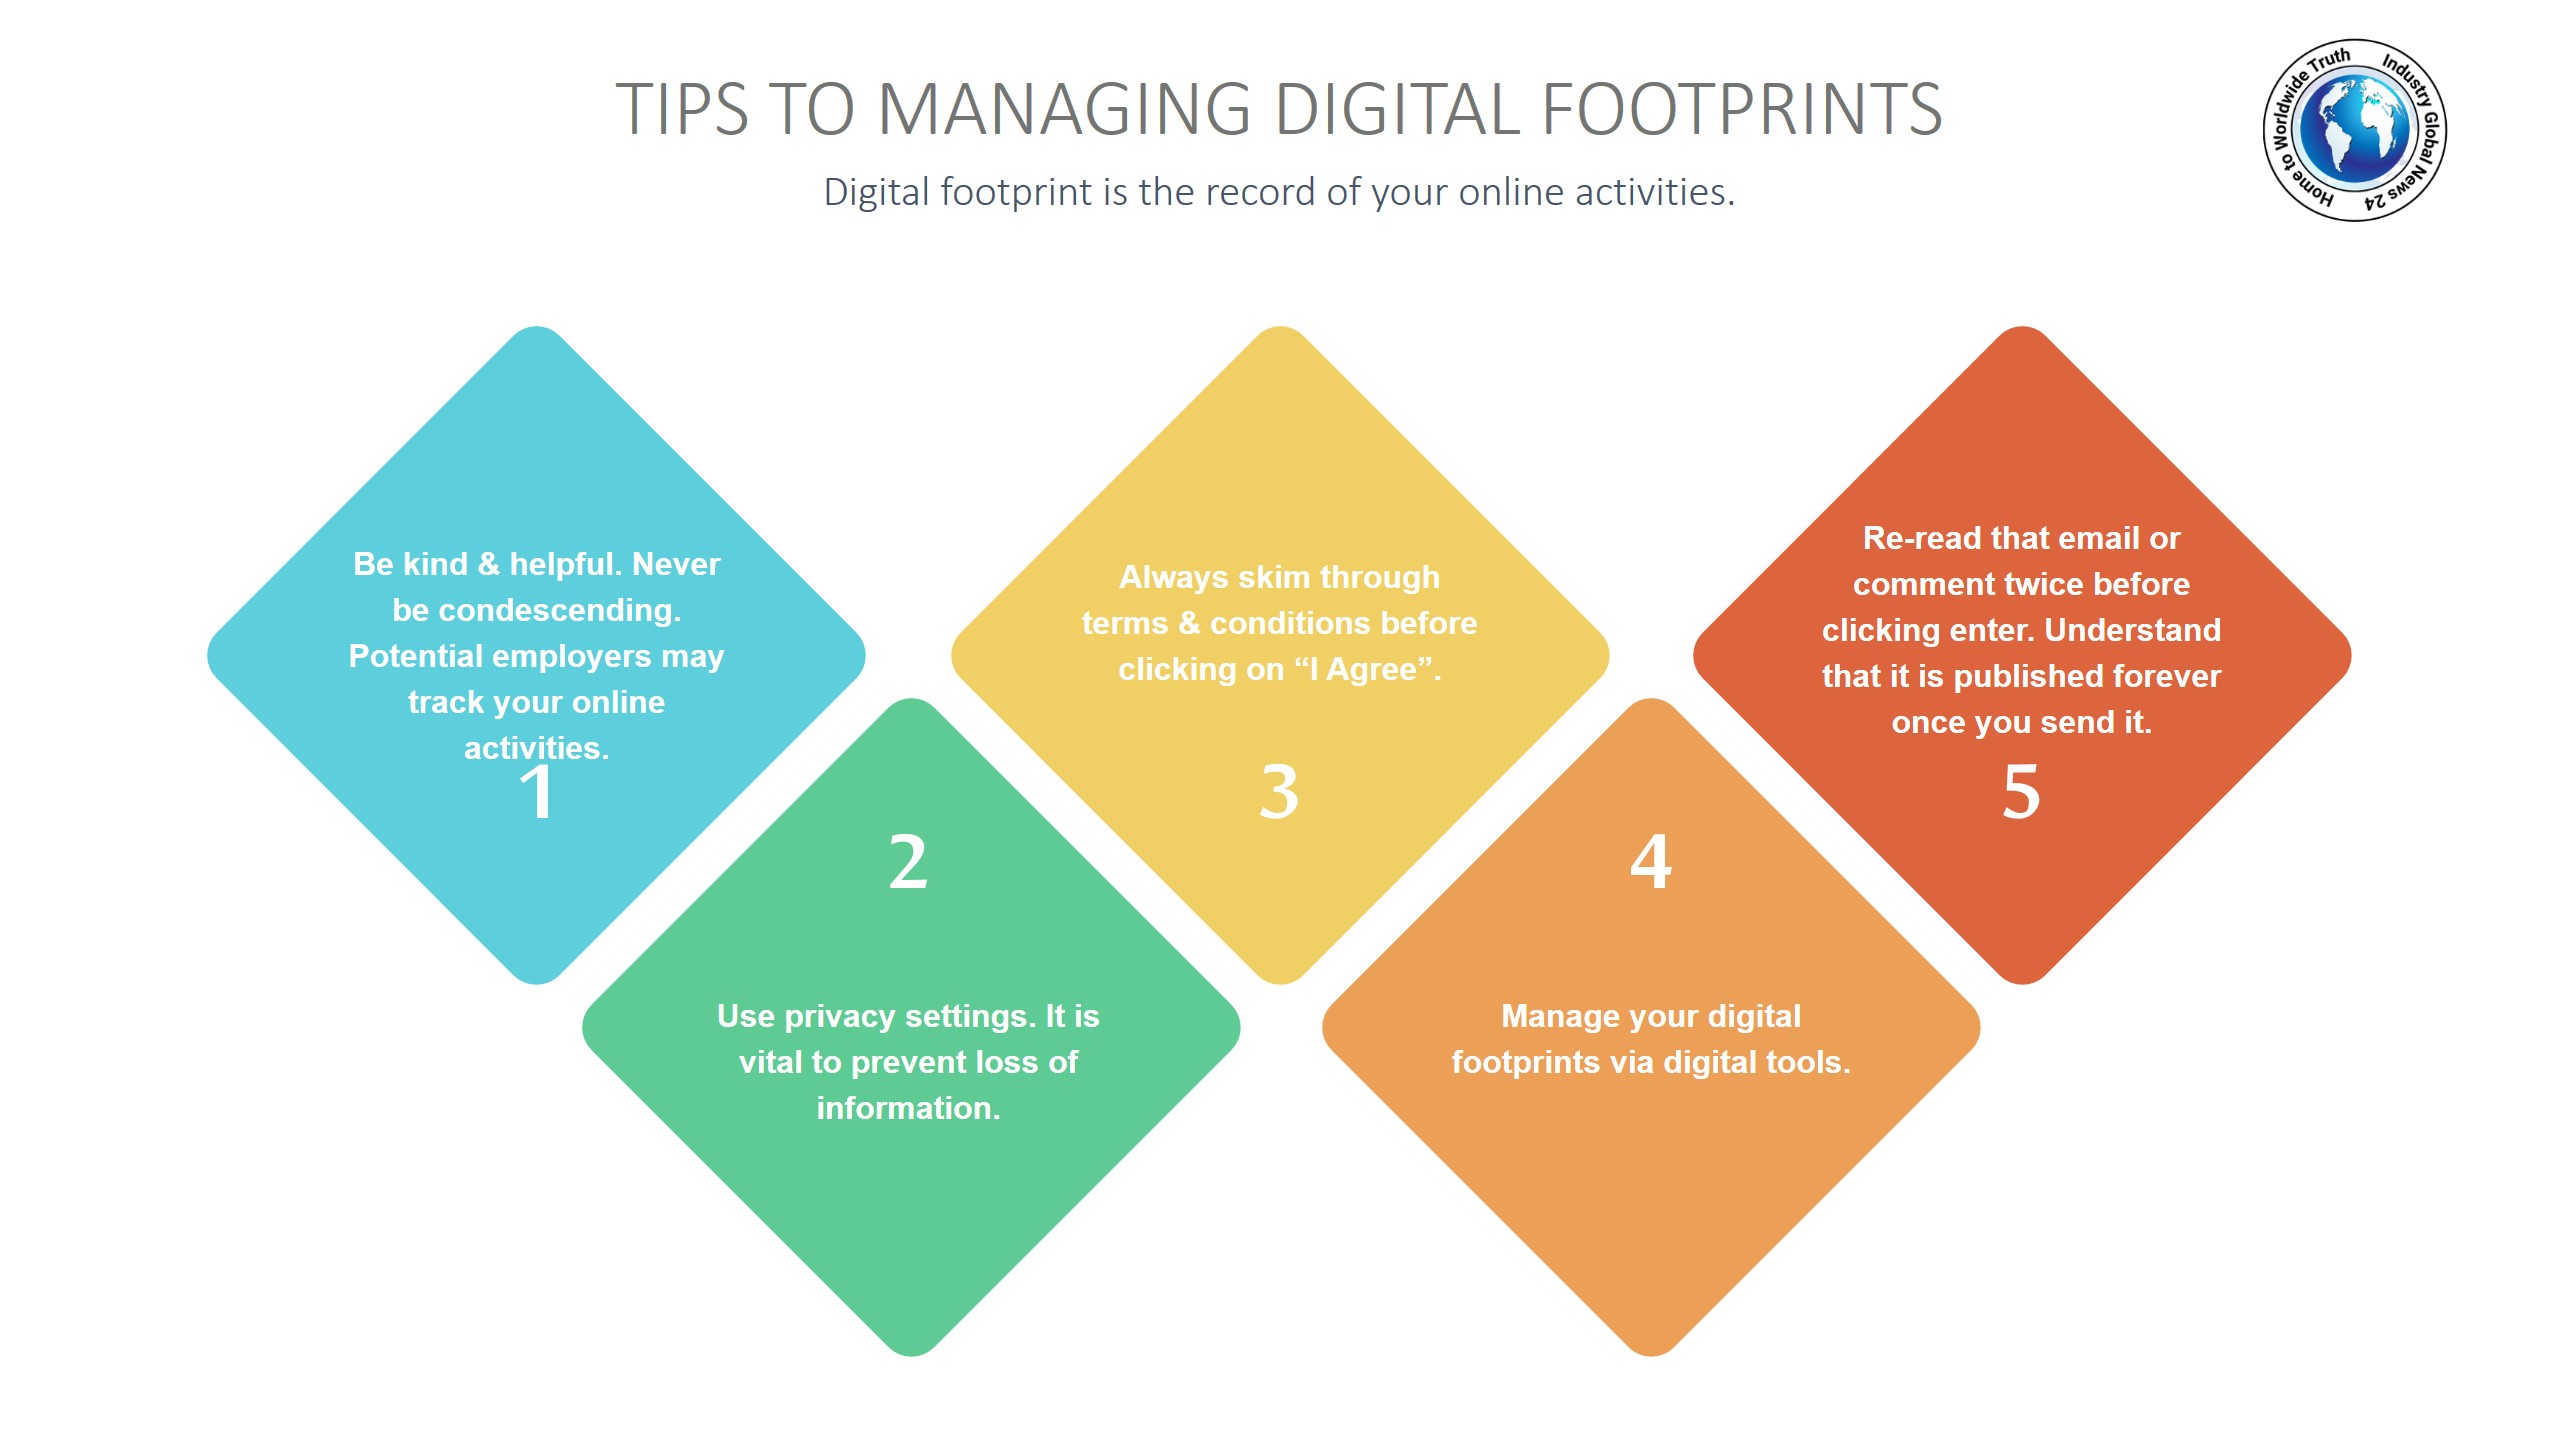 Tips to managing digital footprints